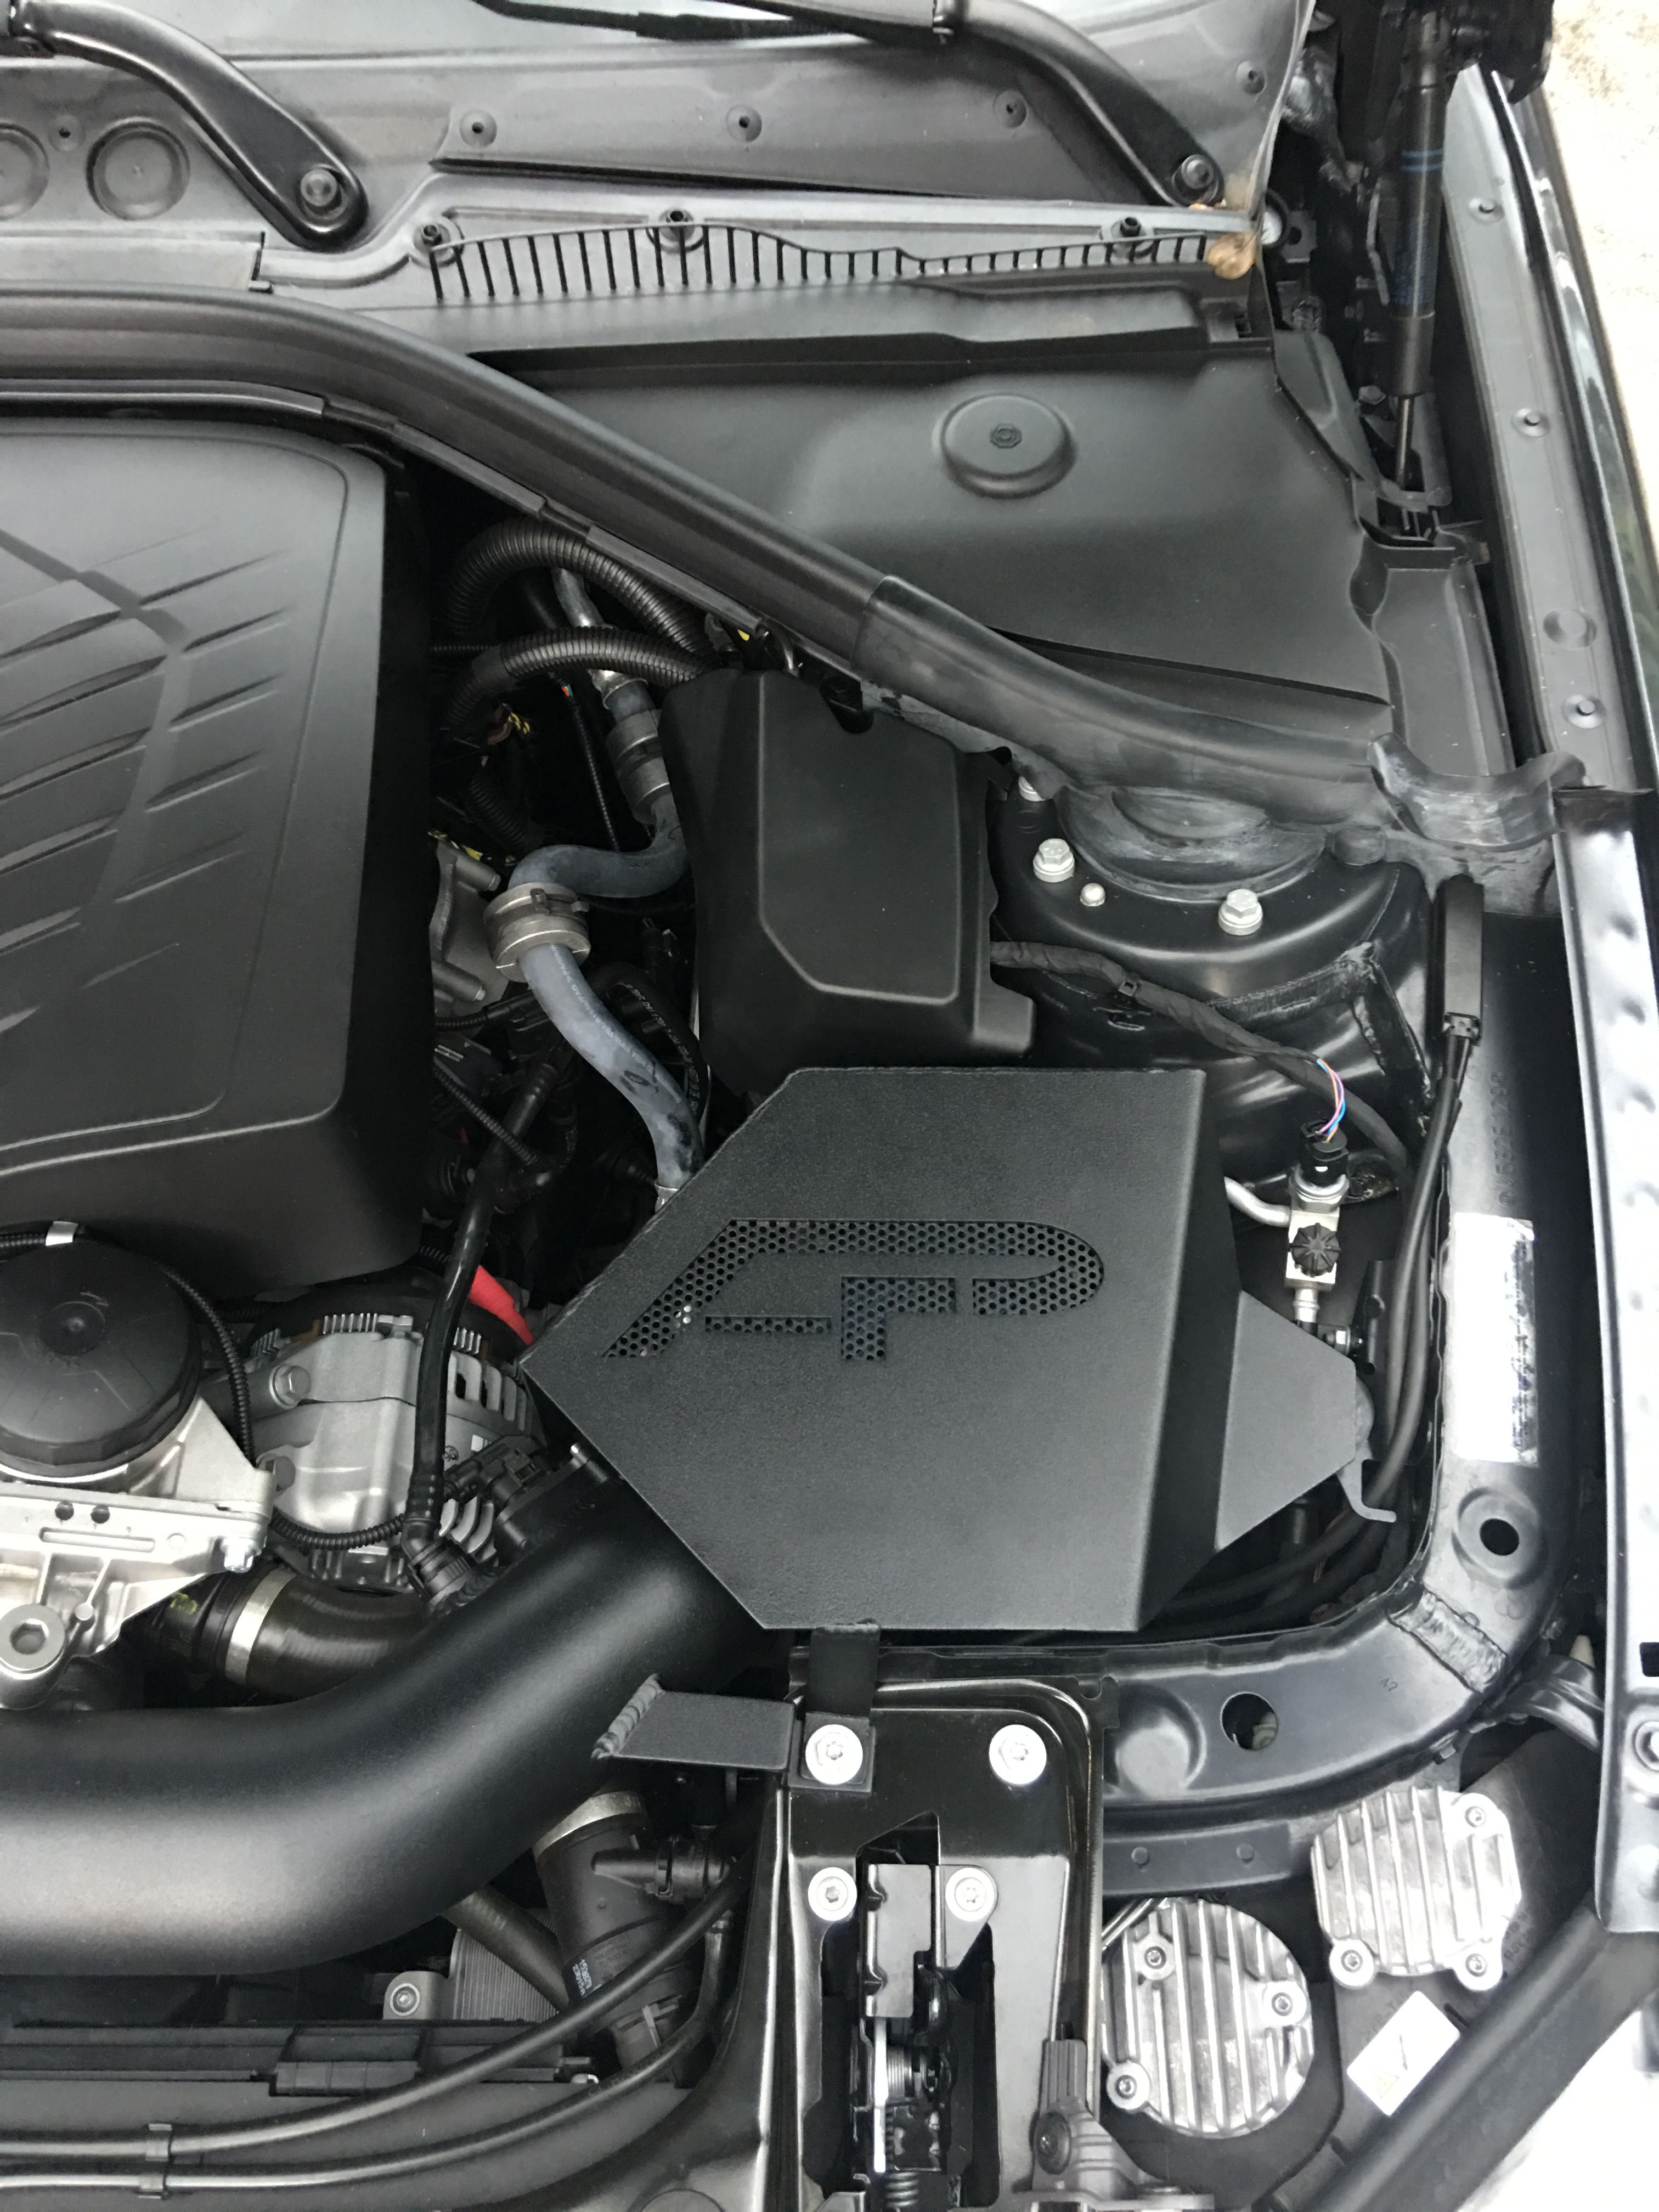 BMW M235i Engine bay with Agency Power Intake installed